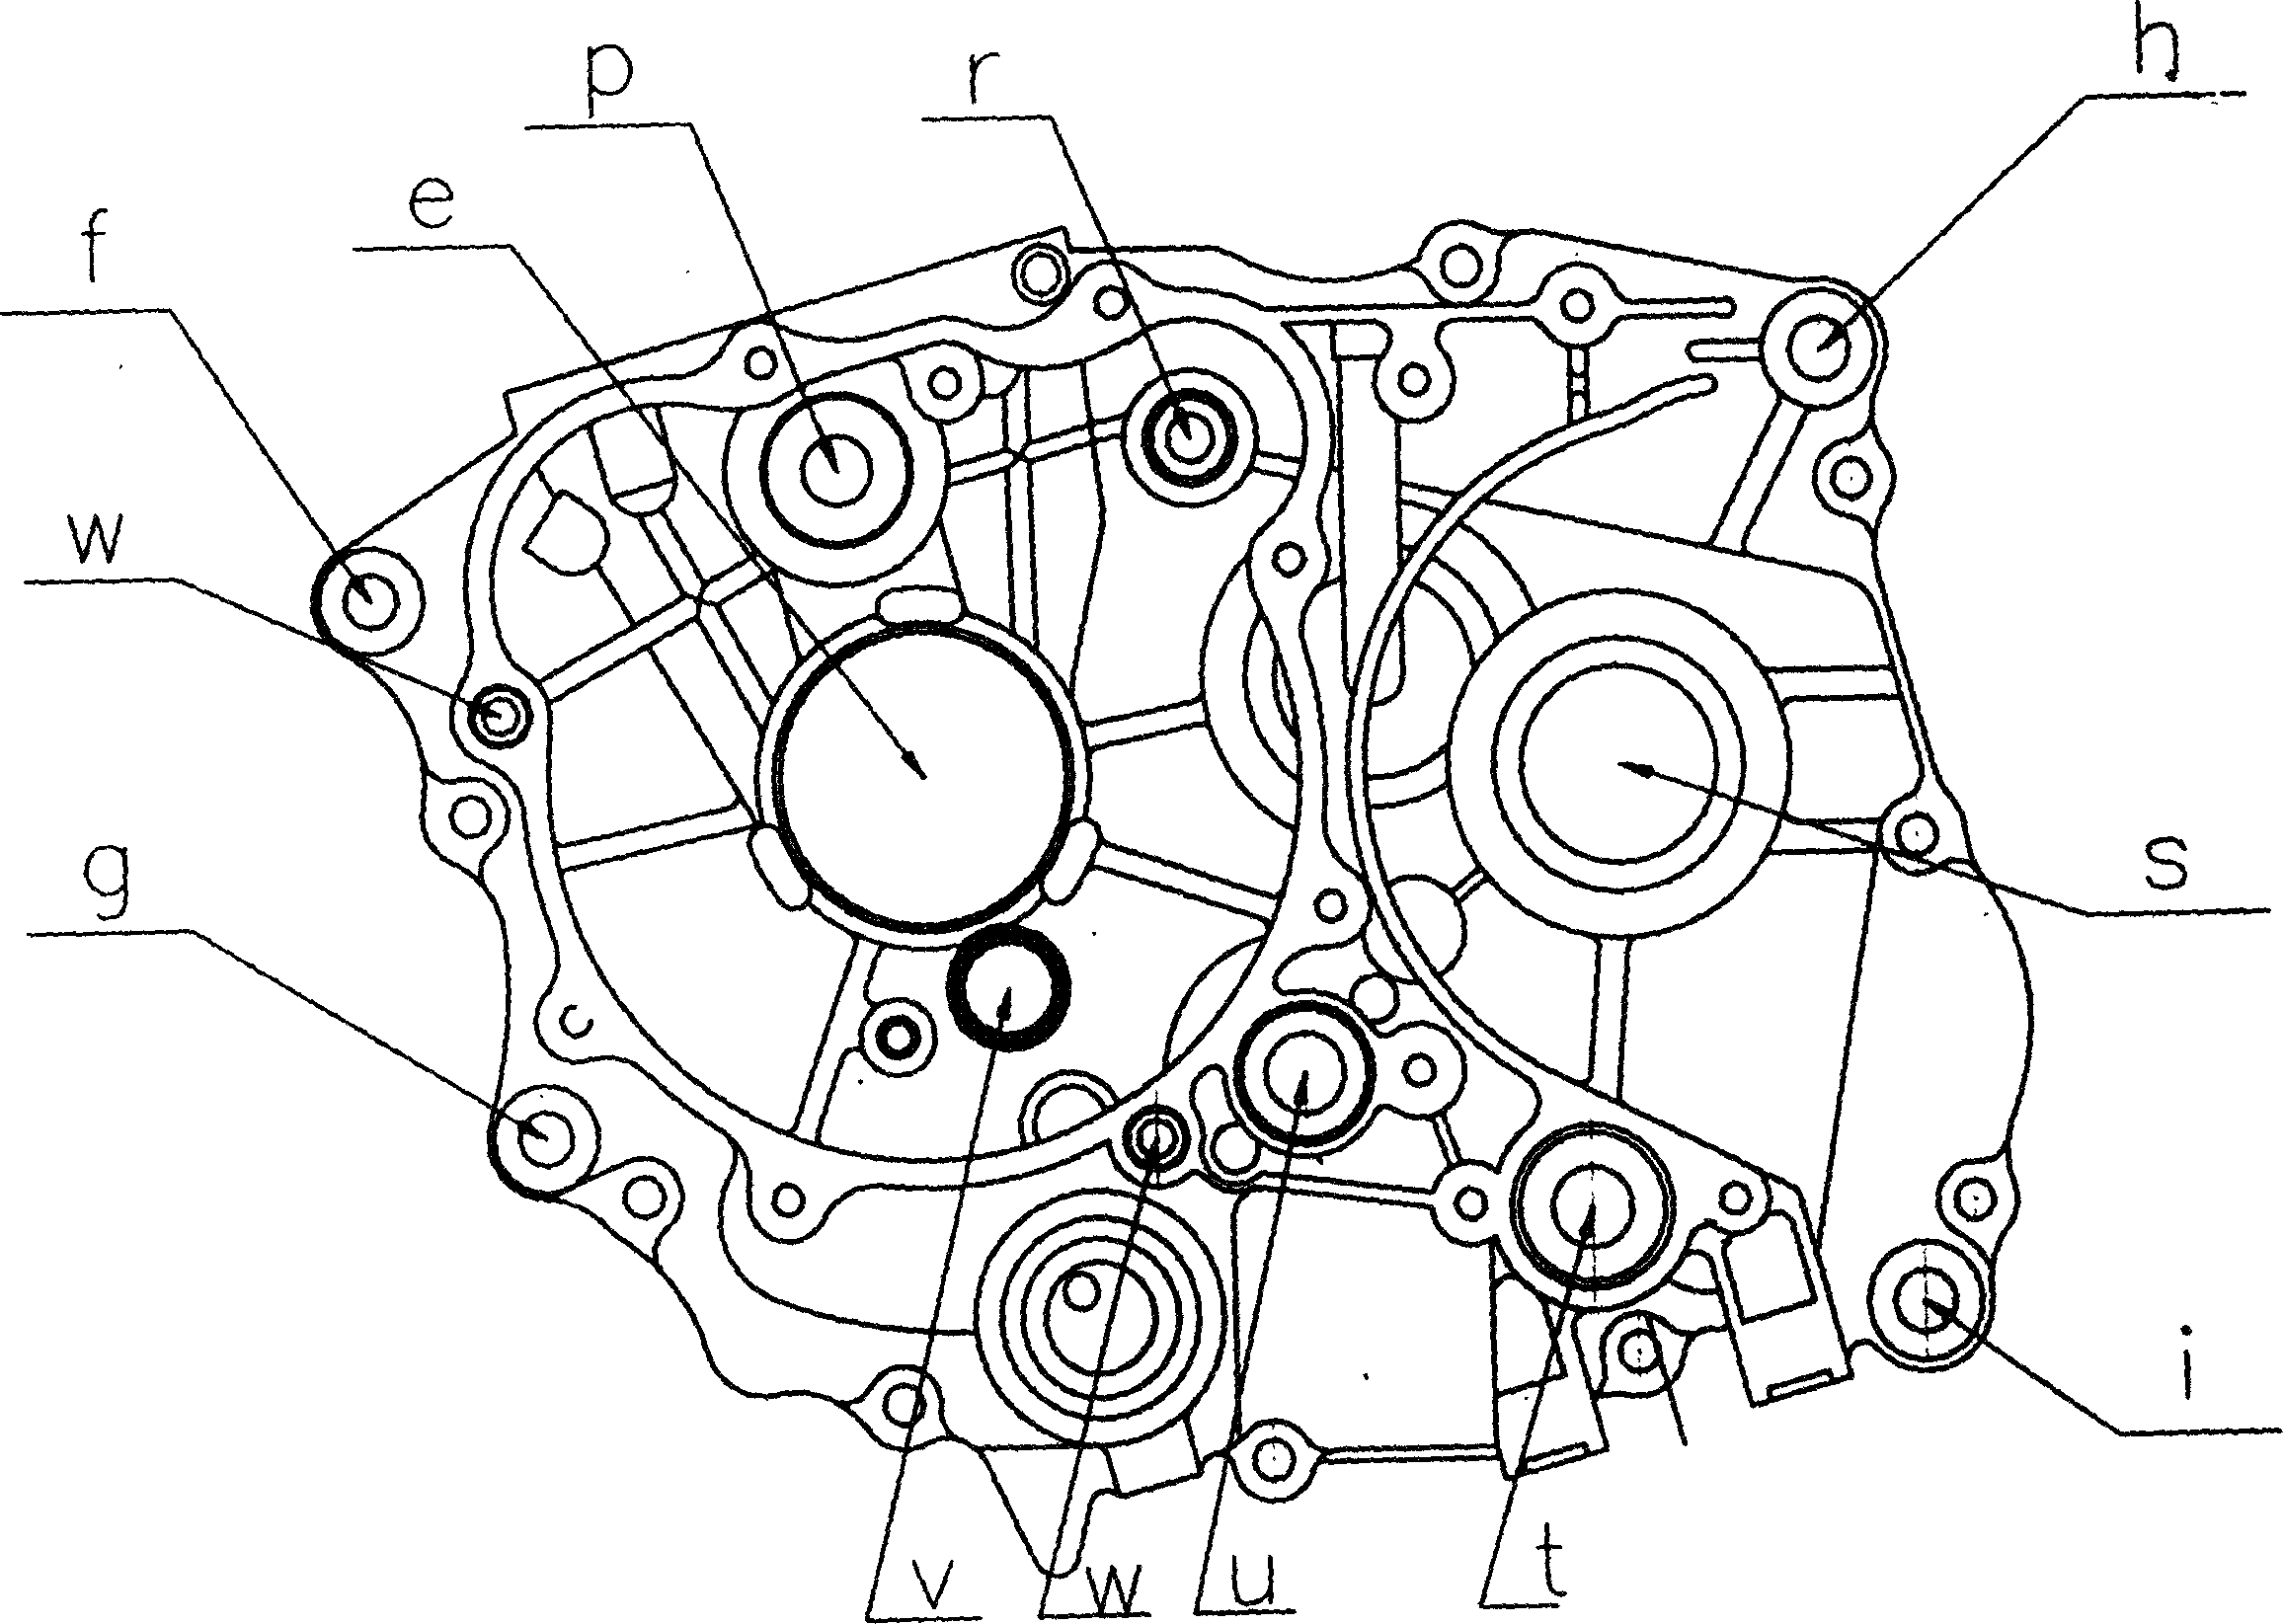 Reducing vibration type engine crankcase of motorcycle